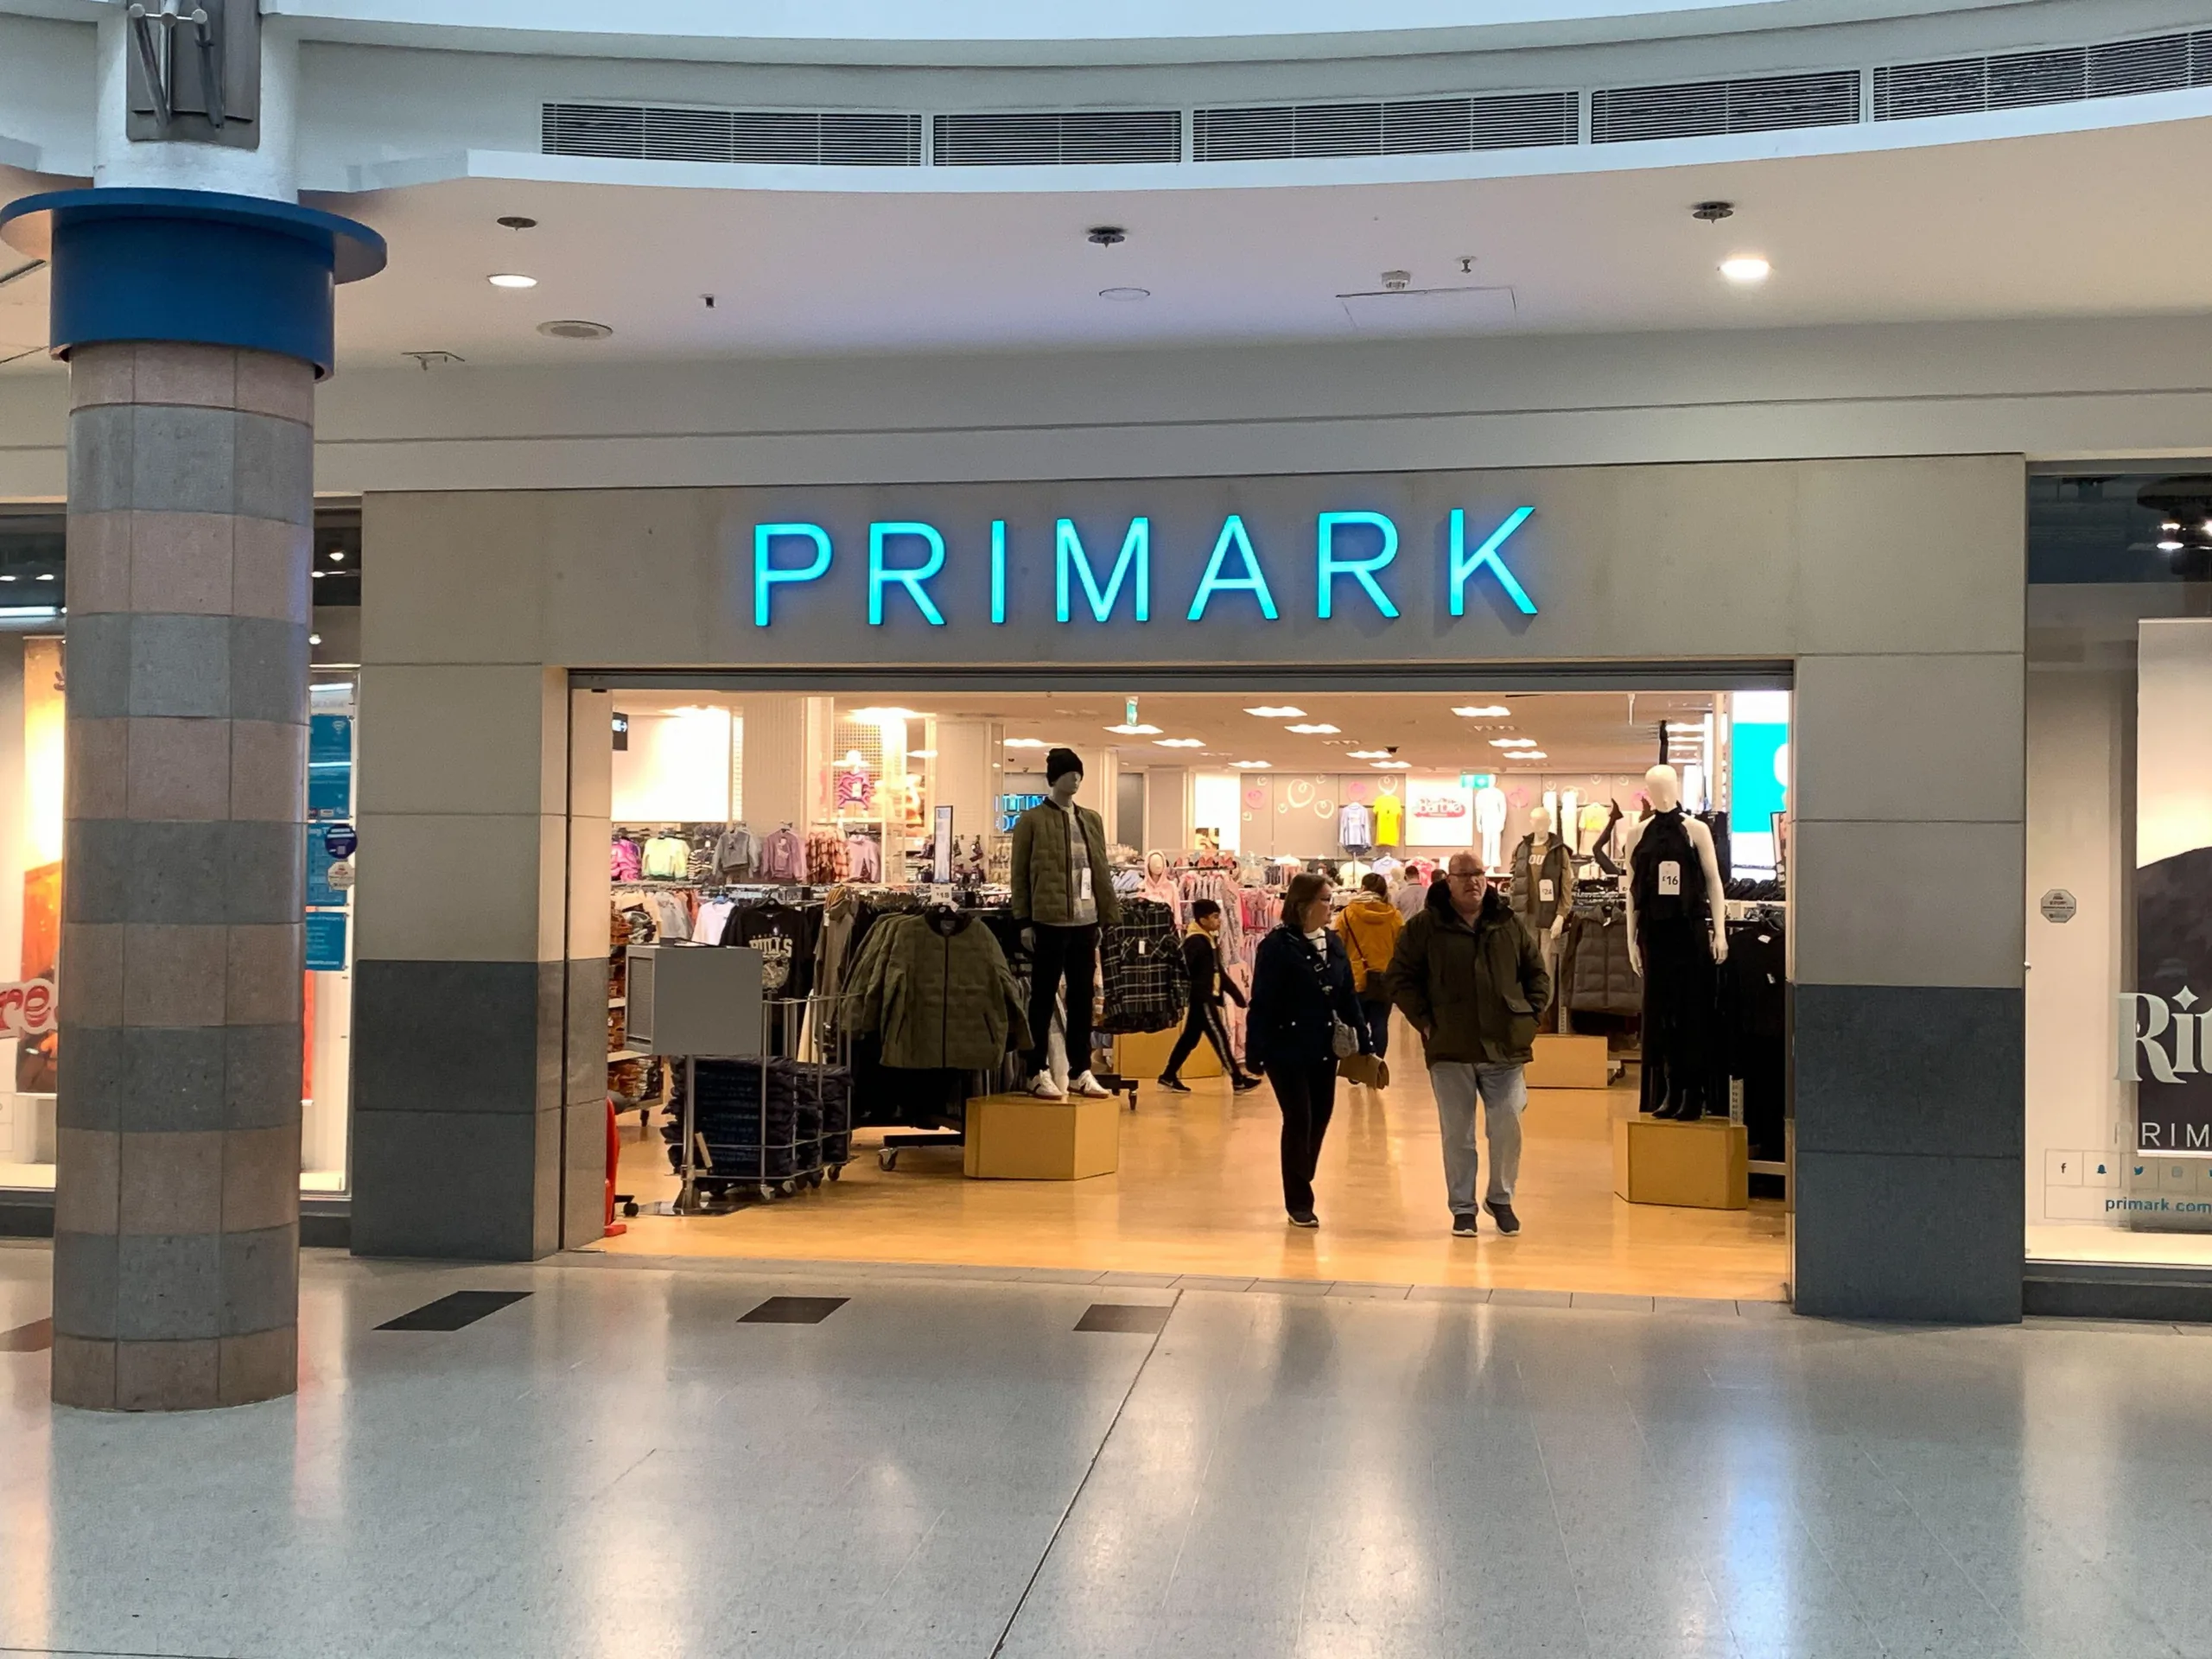 Is Primark closing? A closer look at rumors